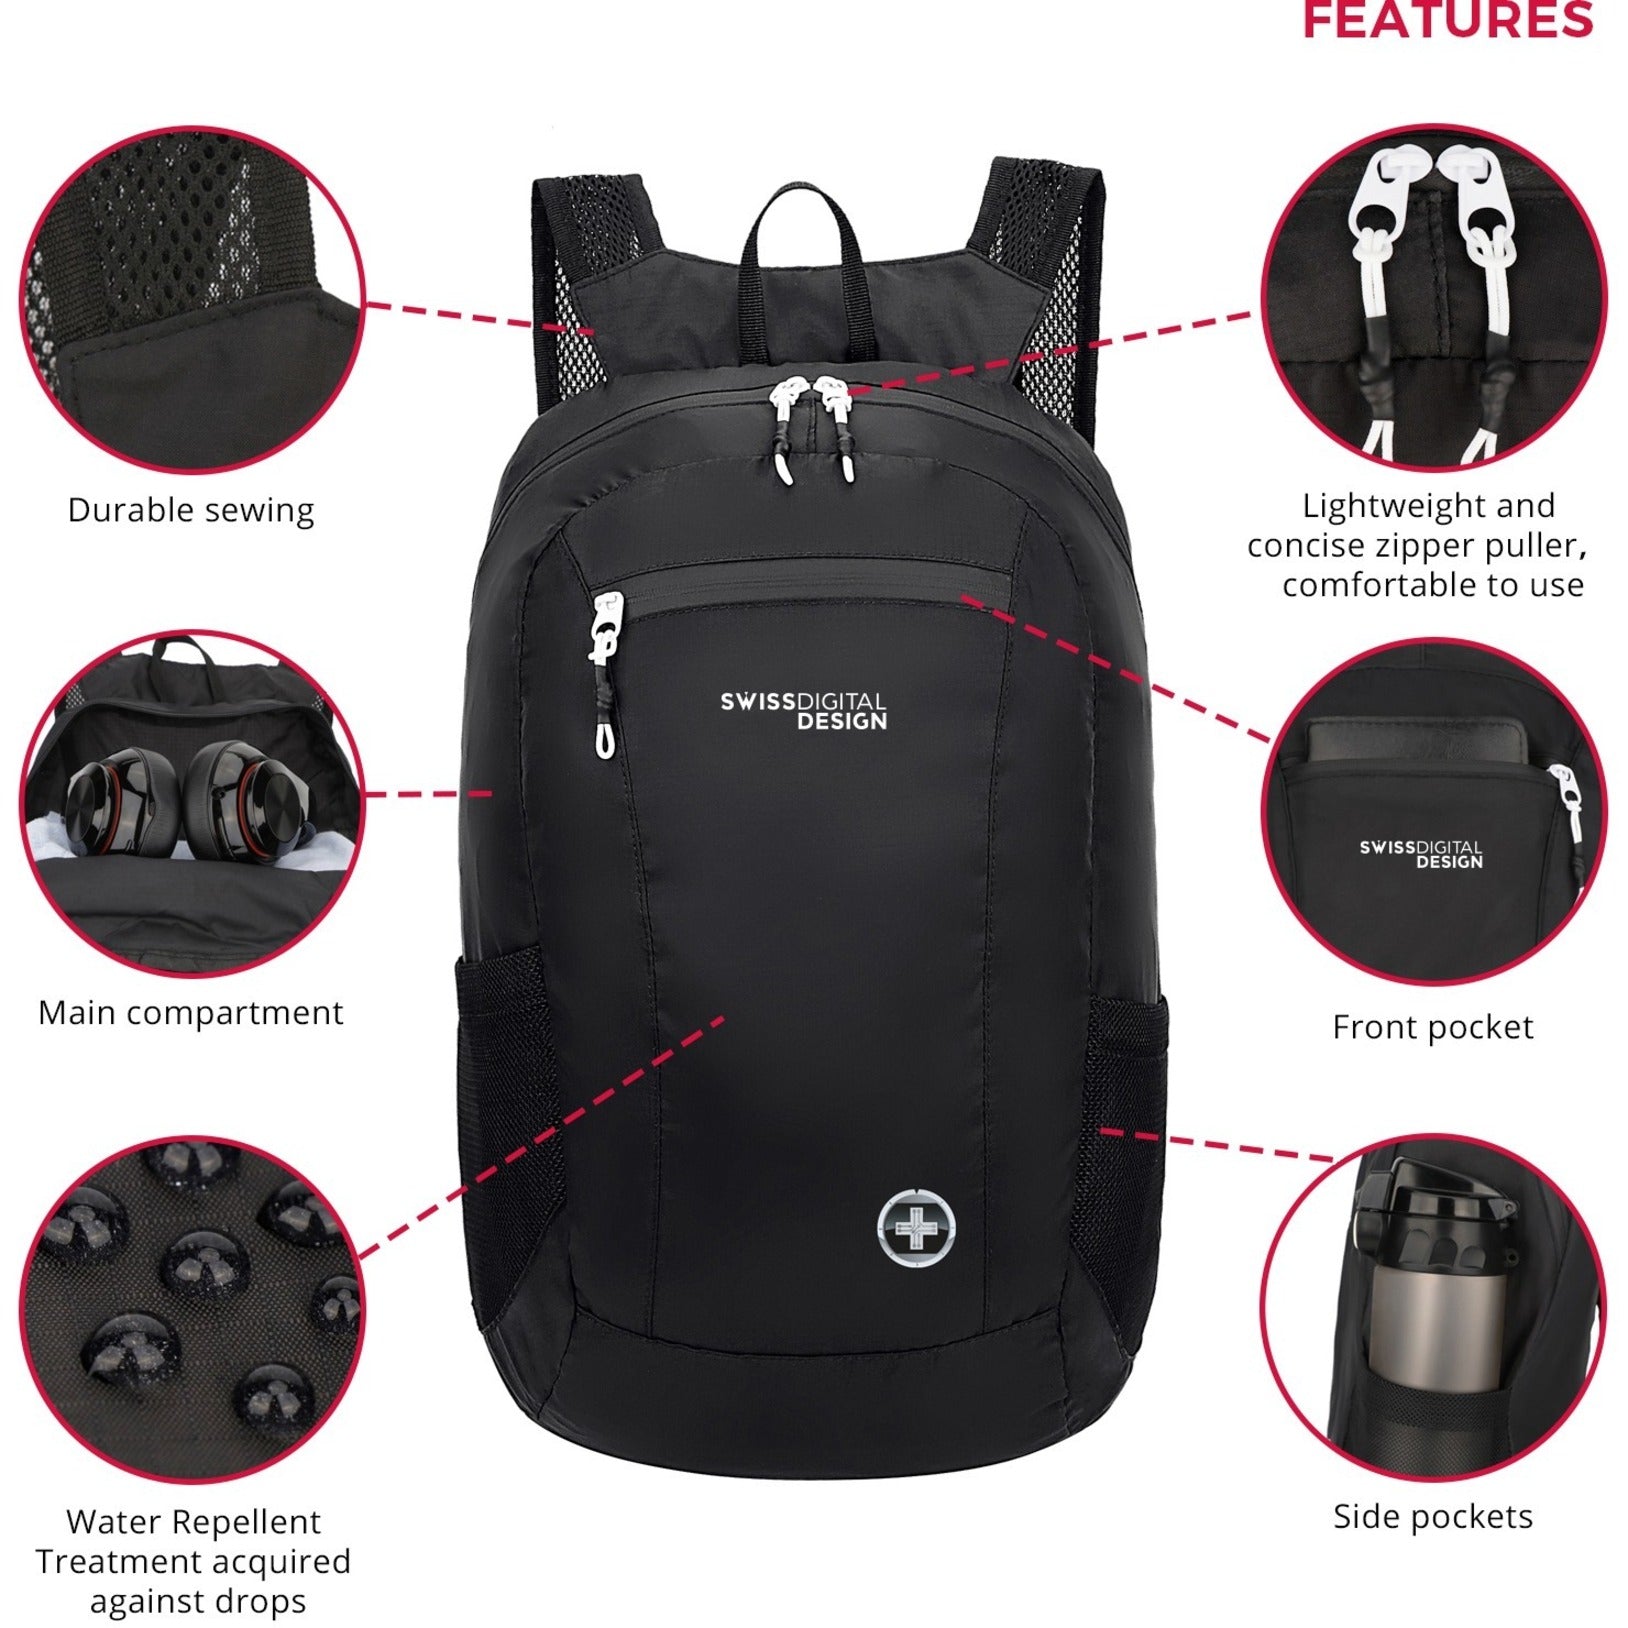 Swissdigital Design SD1595-01 Seagull Foldable Backpack, Water-Resistant, Lightweight, Large Capacity